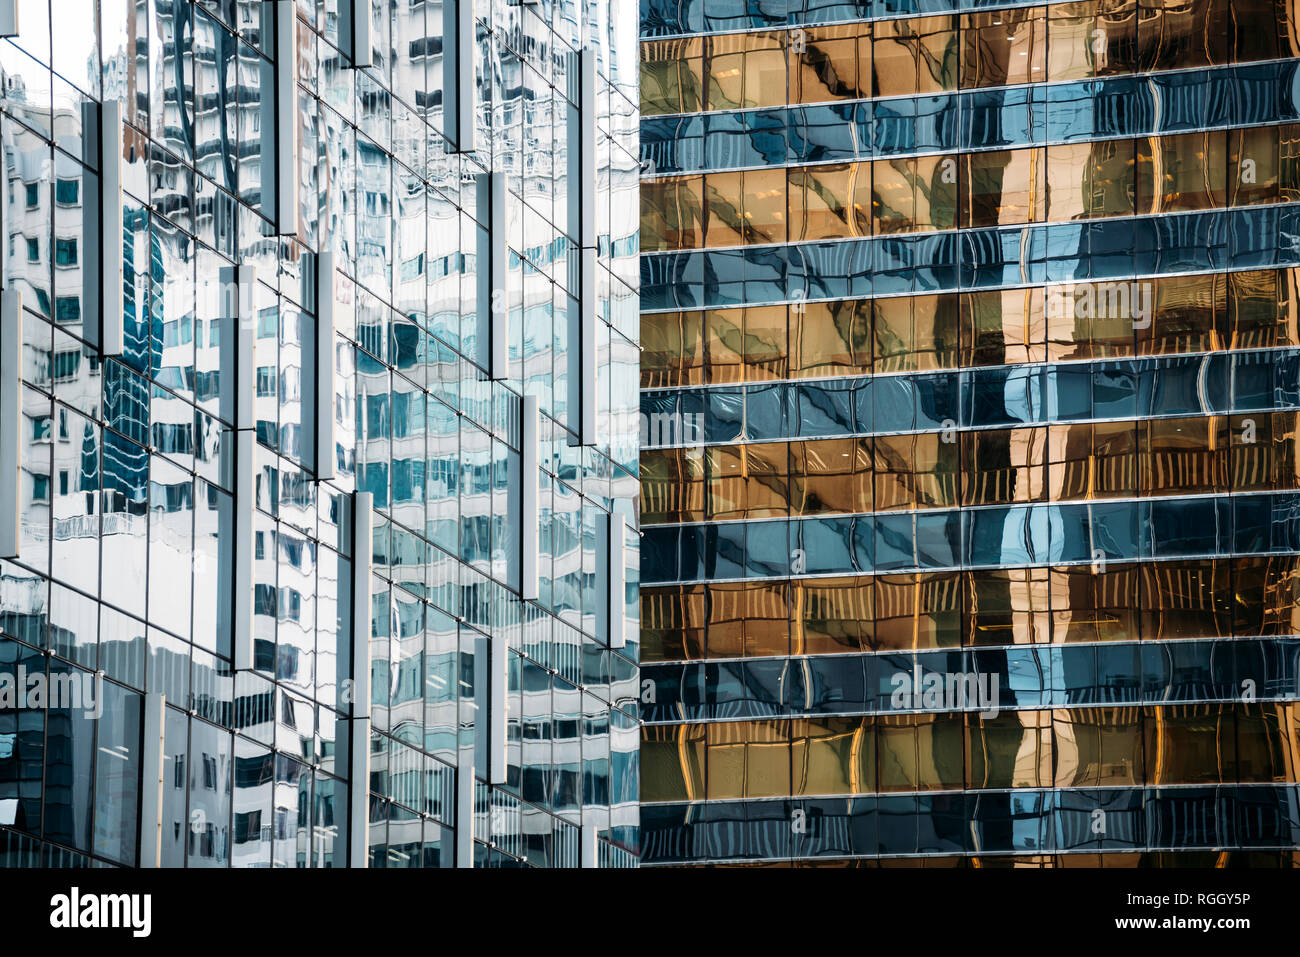 La Chine, Hong Kong, Hong Kong Island, les façades en verre des gratte-ciel, vue partielle Banque D'Images